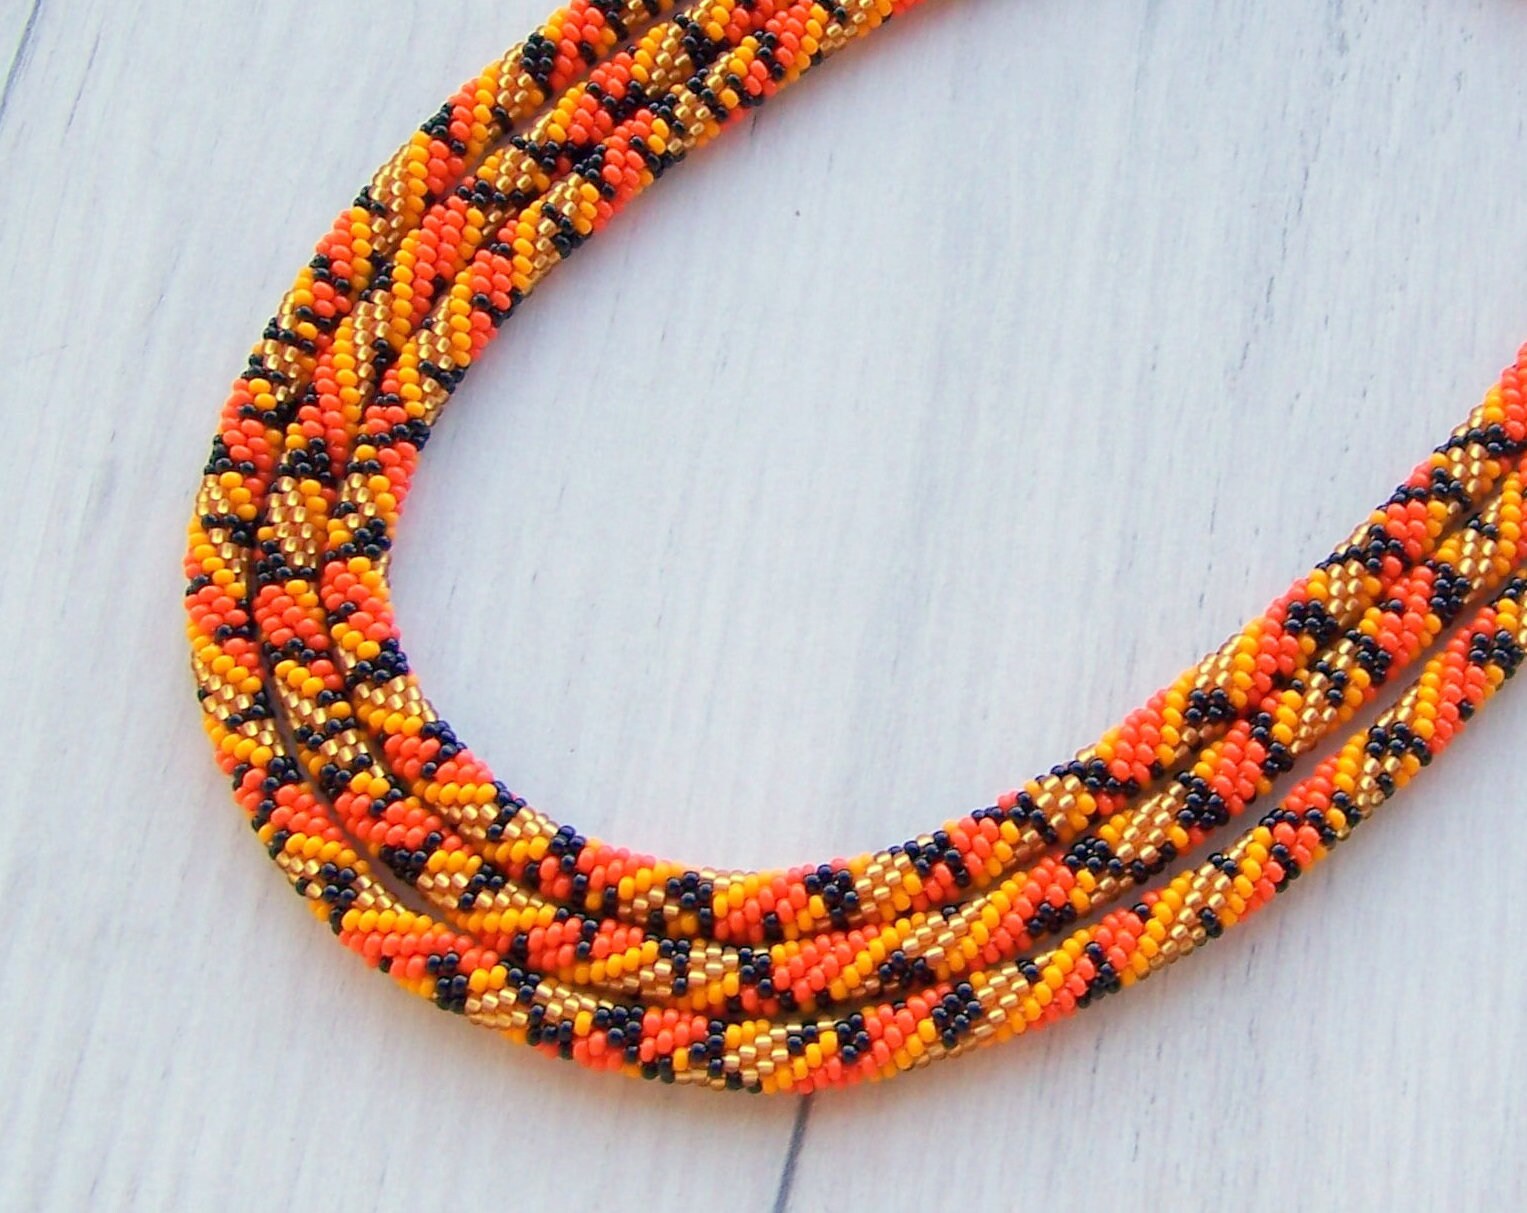 DIY Crafts DIY Kit for Adults Bead Crochet Kit Summer Multicolor